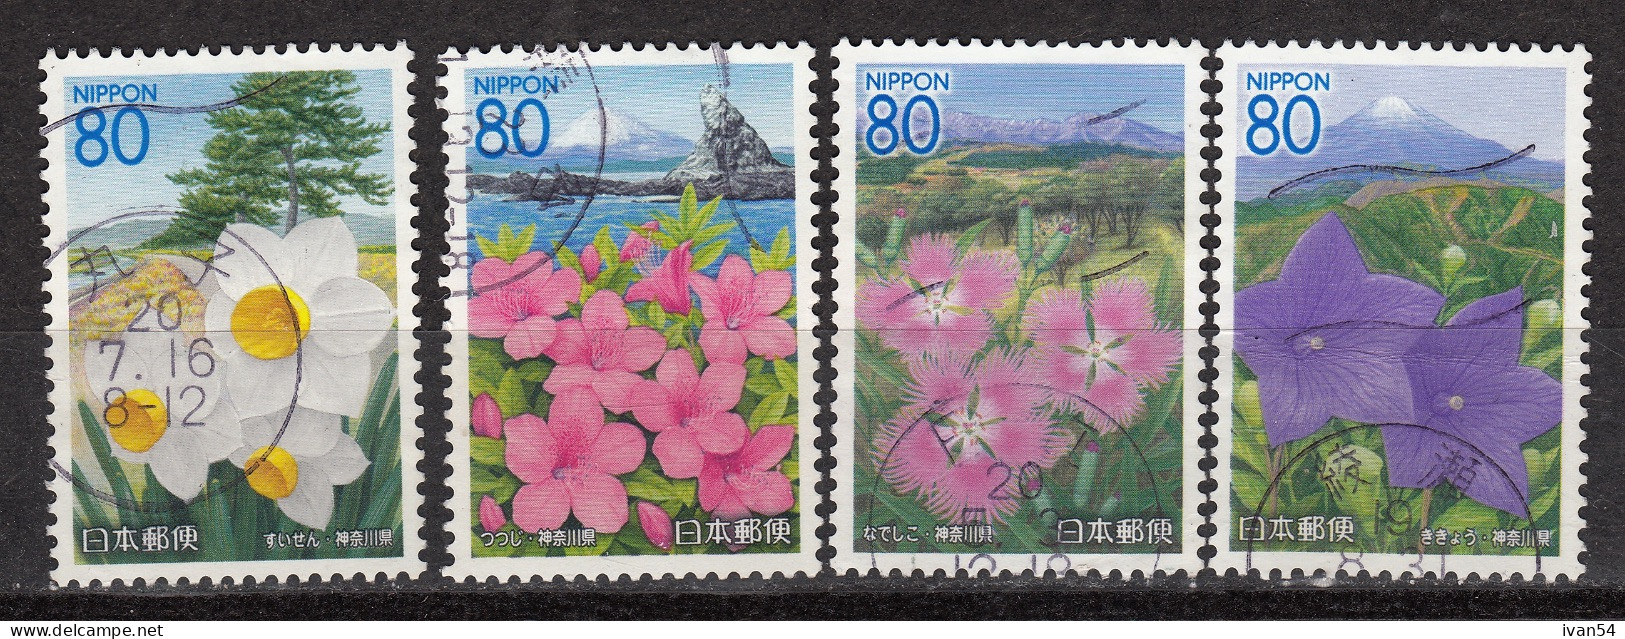 JAPAN 3893-6 (0) Bloemen Flowers Fleurs 2006 - Usati